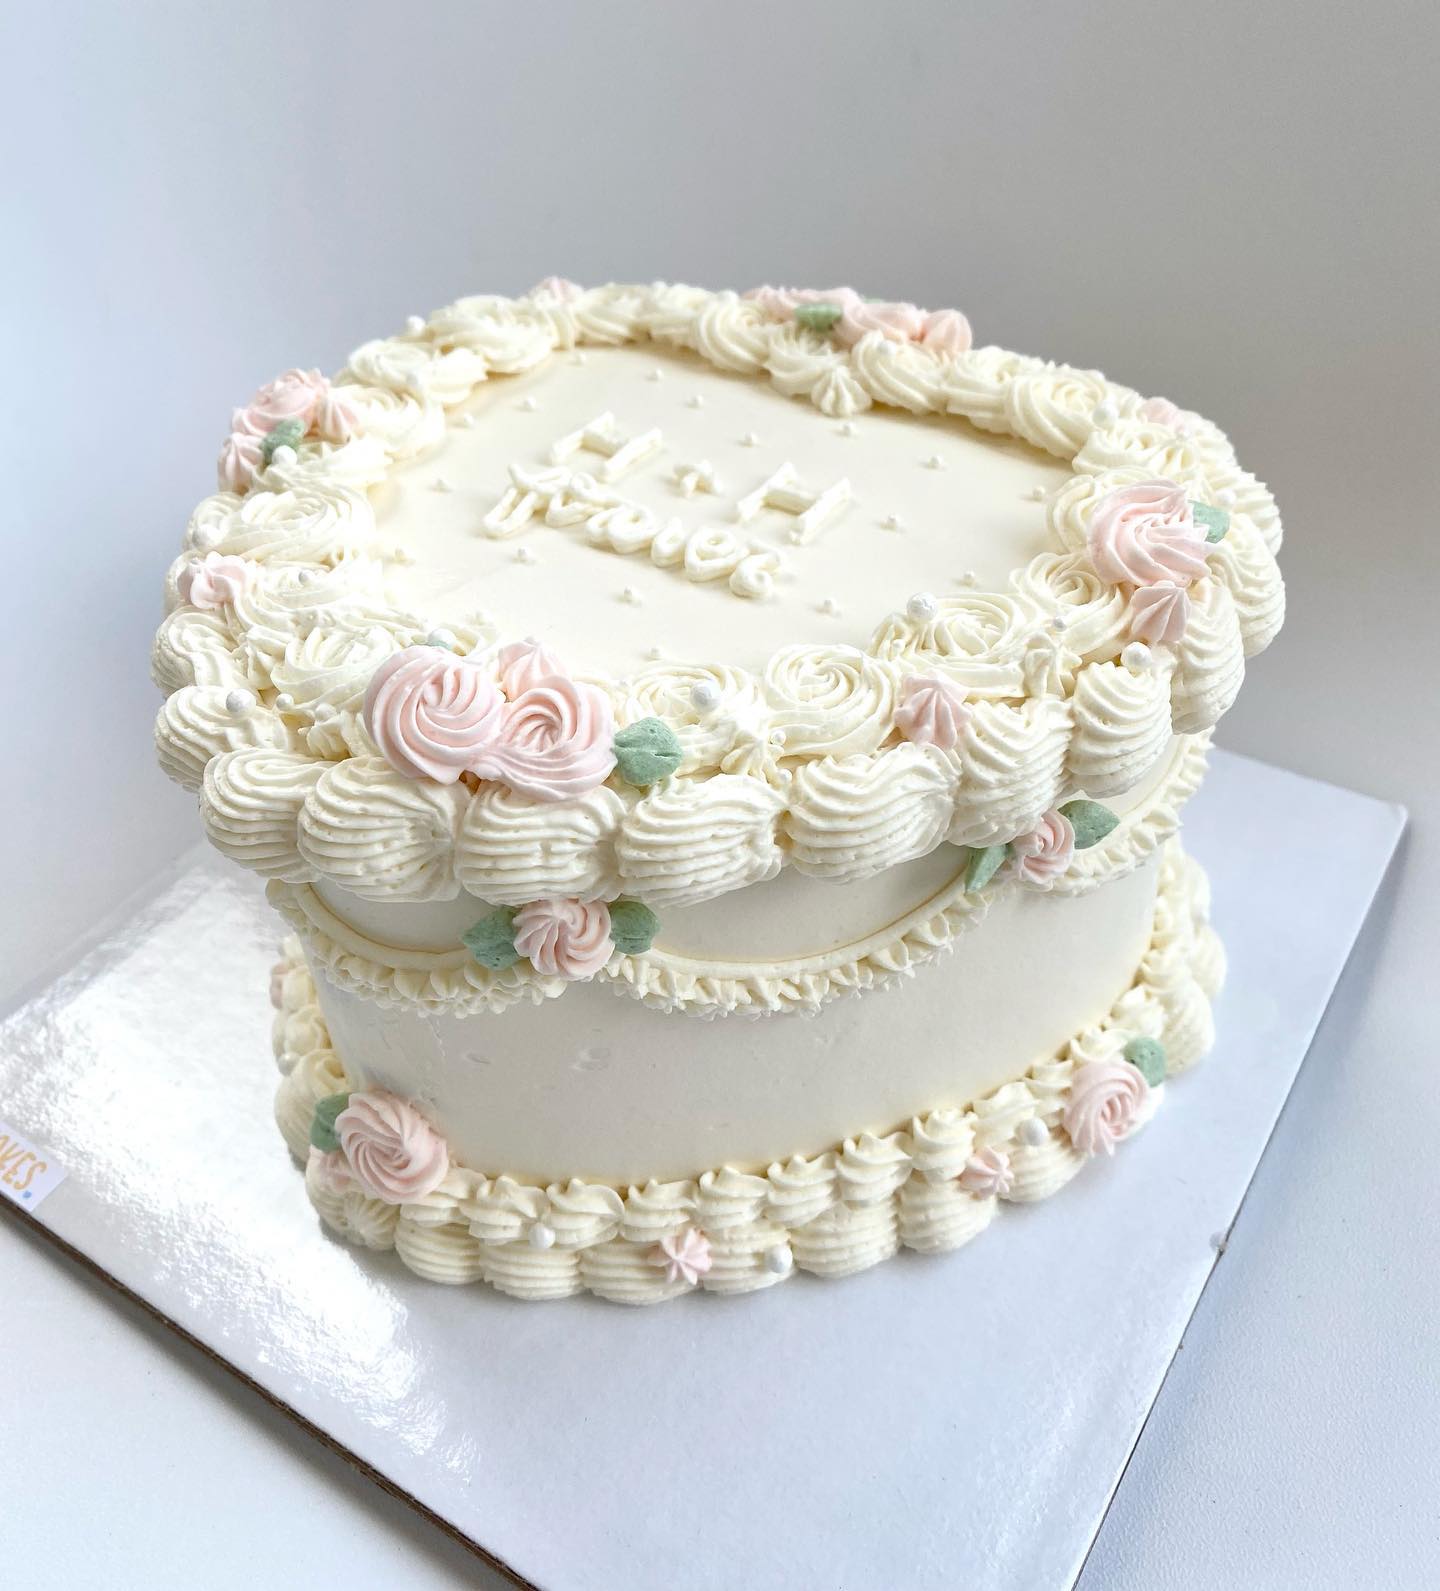 Small Yet Whimsical Cake Ideas For Your Intimate Wedding | Fresh flower cake,  Floral cake design, Flower cake design